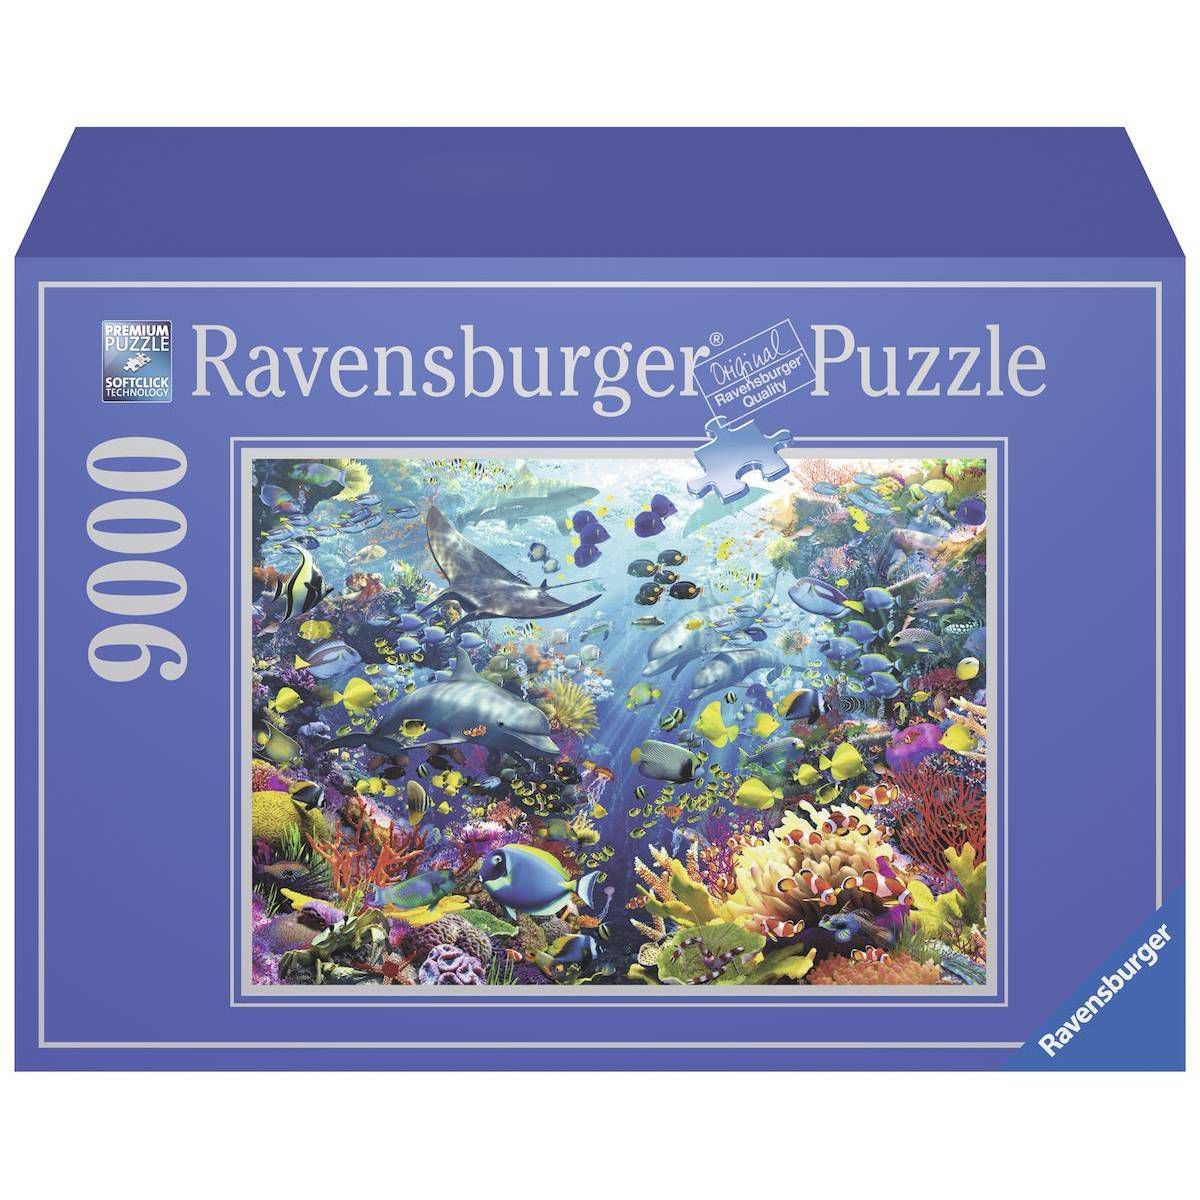 Ravensburger Underwater Paradise Jigsaw Puzzle - 9000pc | Target